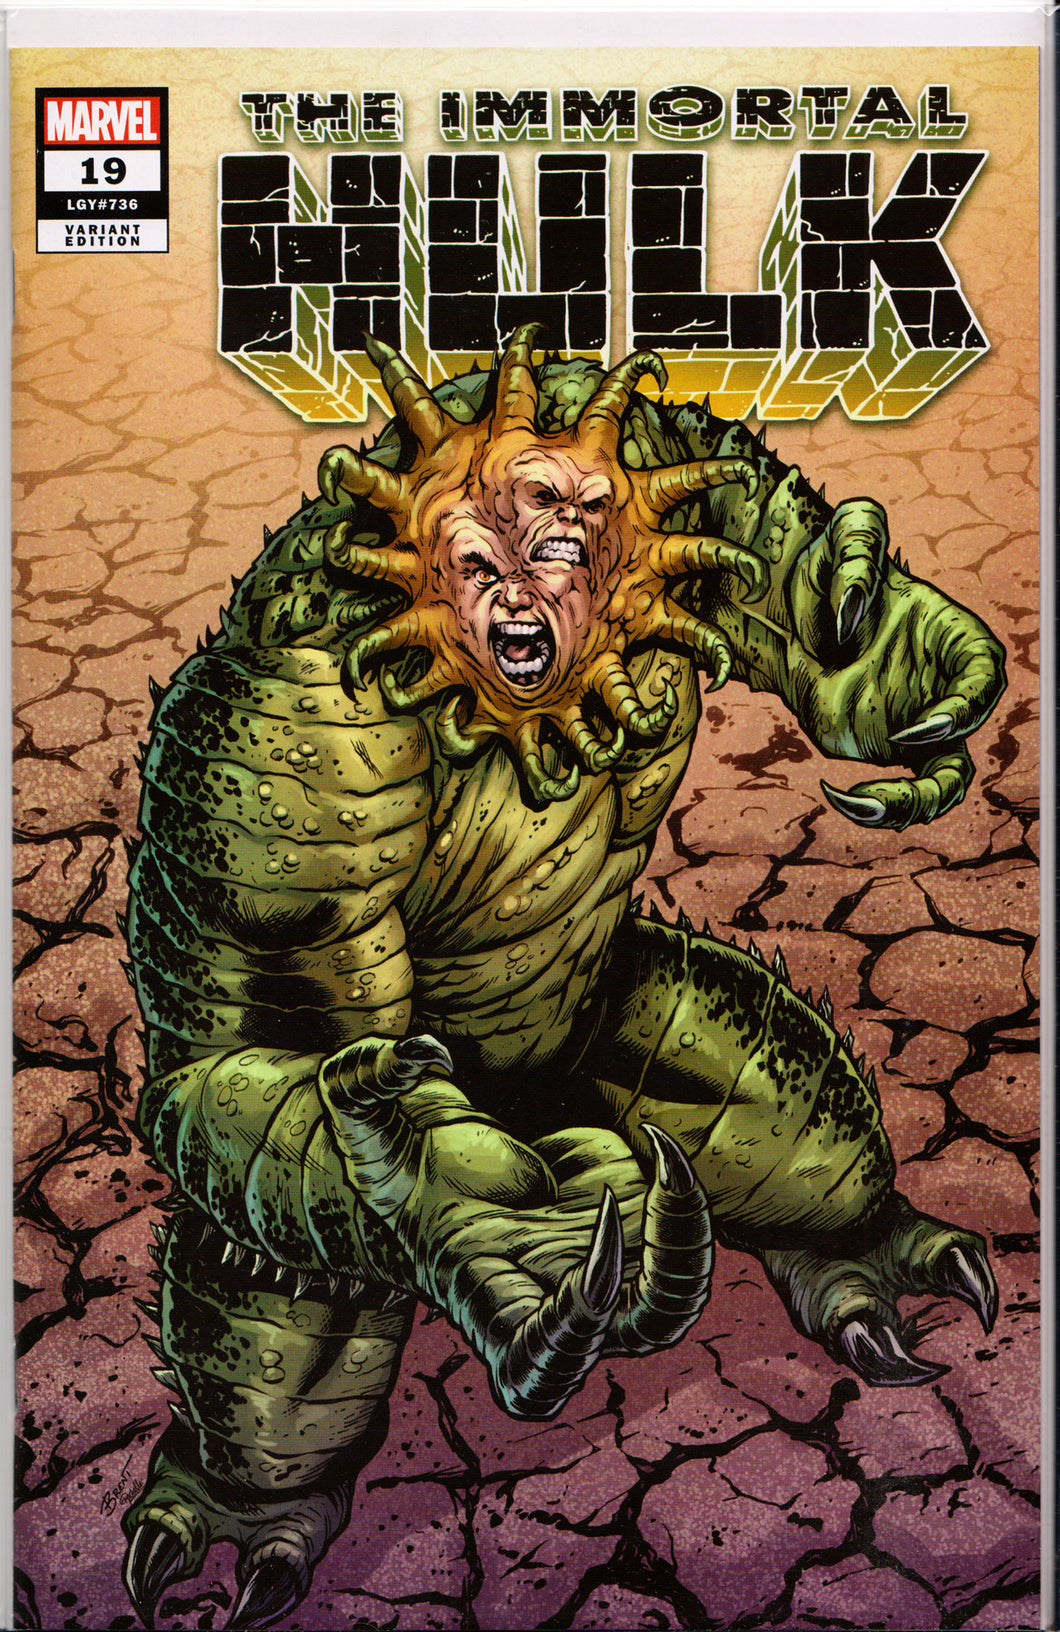 THE IMMORTAL HULK #19 EXCLUSIVE VARIANT COMIC BOOK ~ Marvel Comics